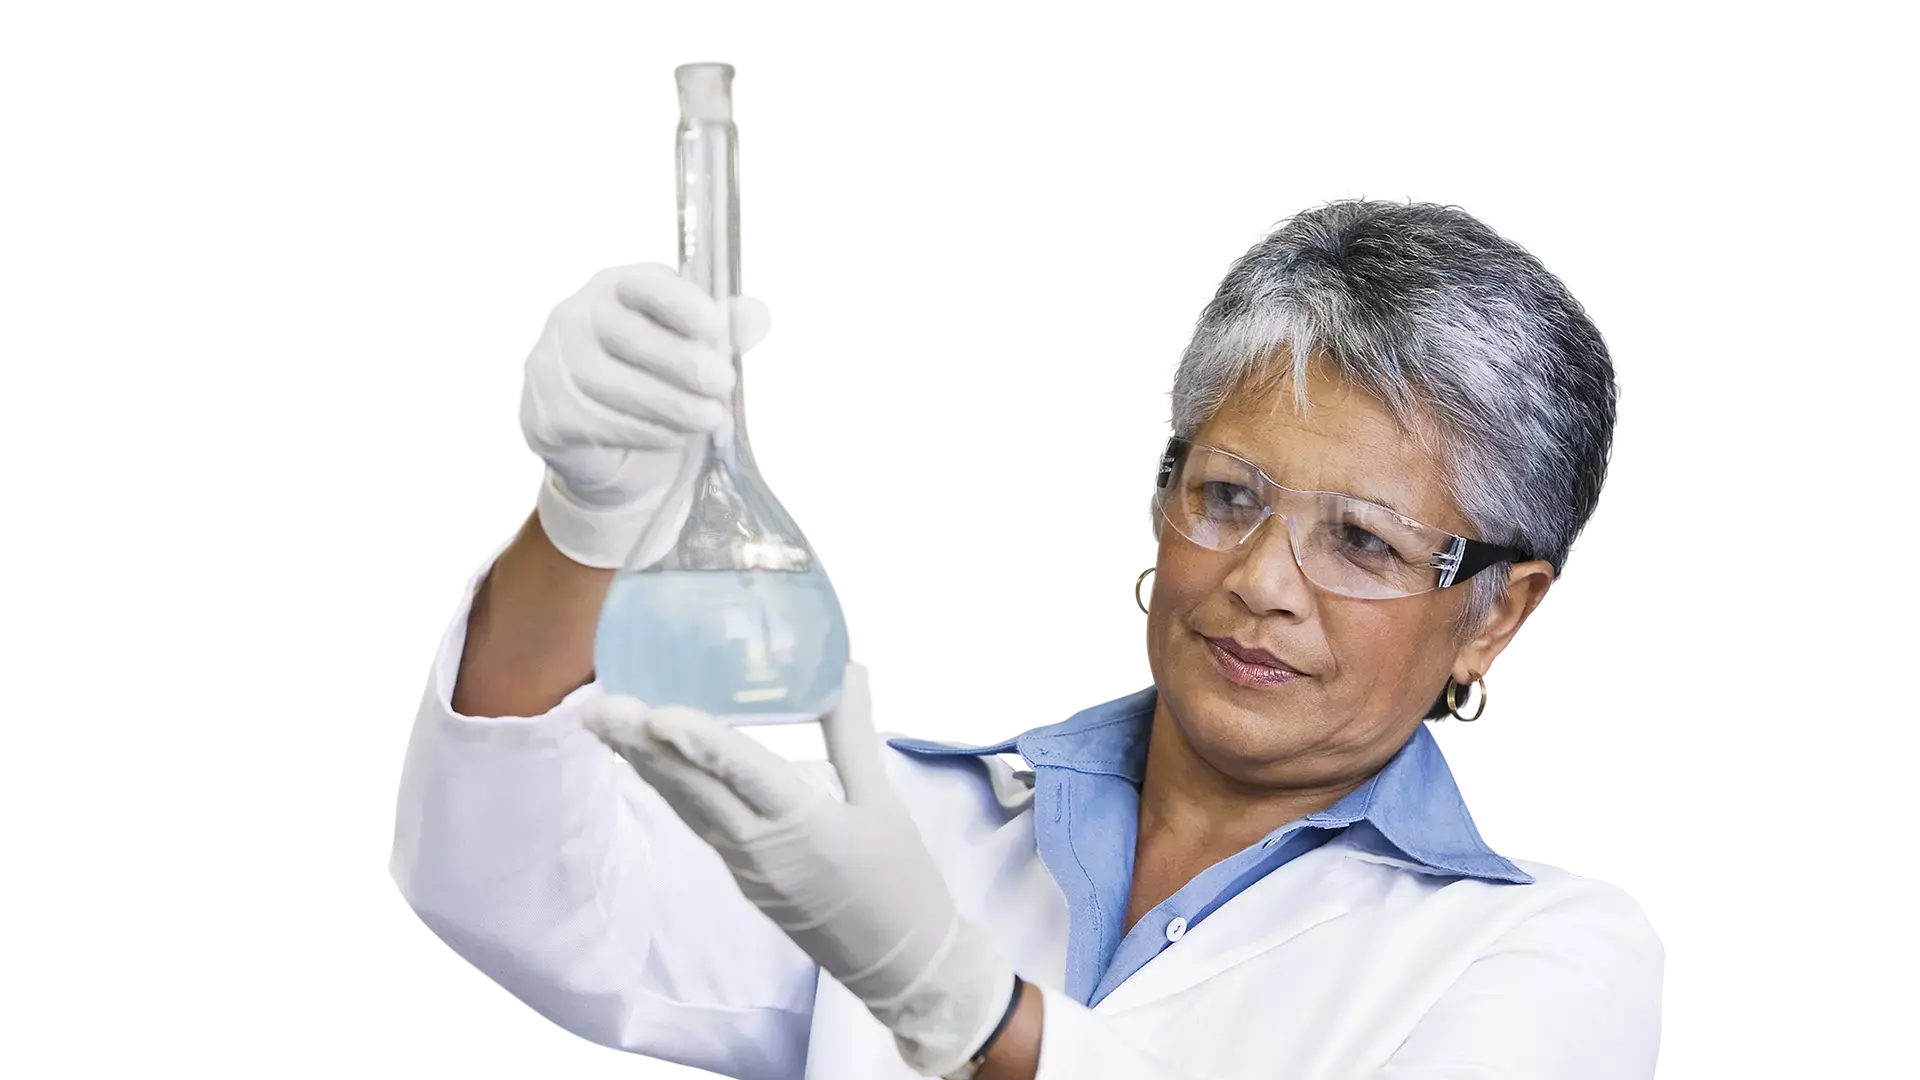 Scientist looking at beaker of chemicals